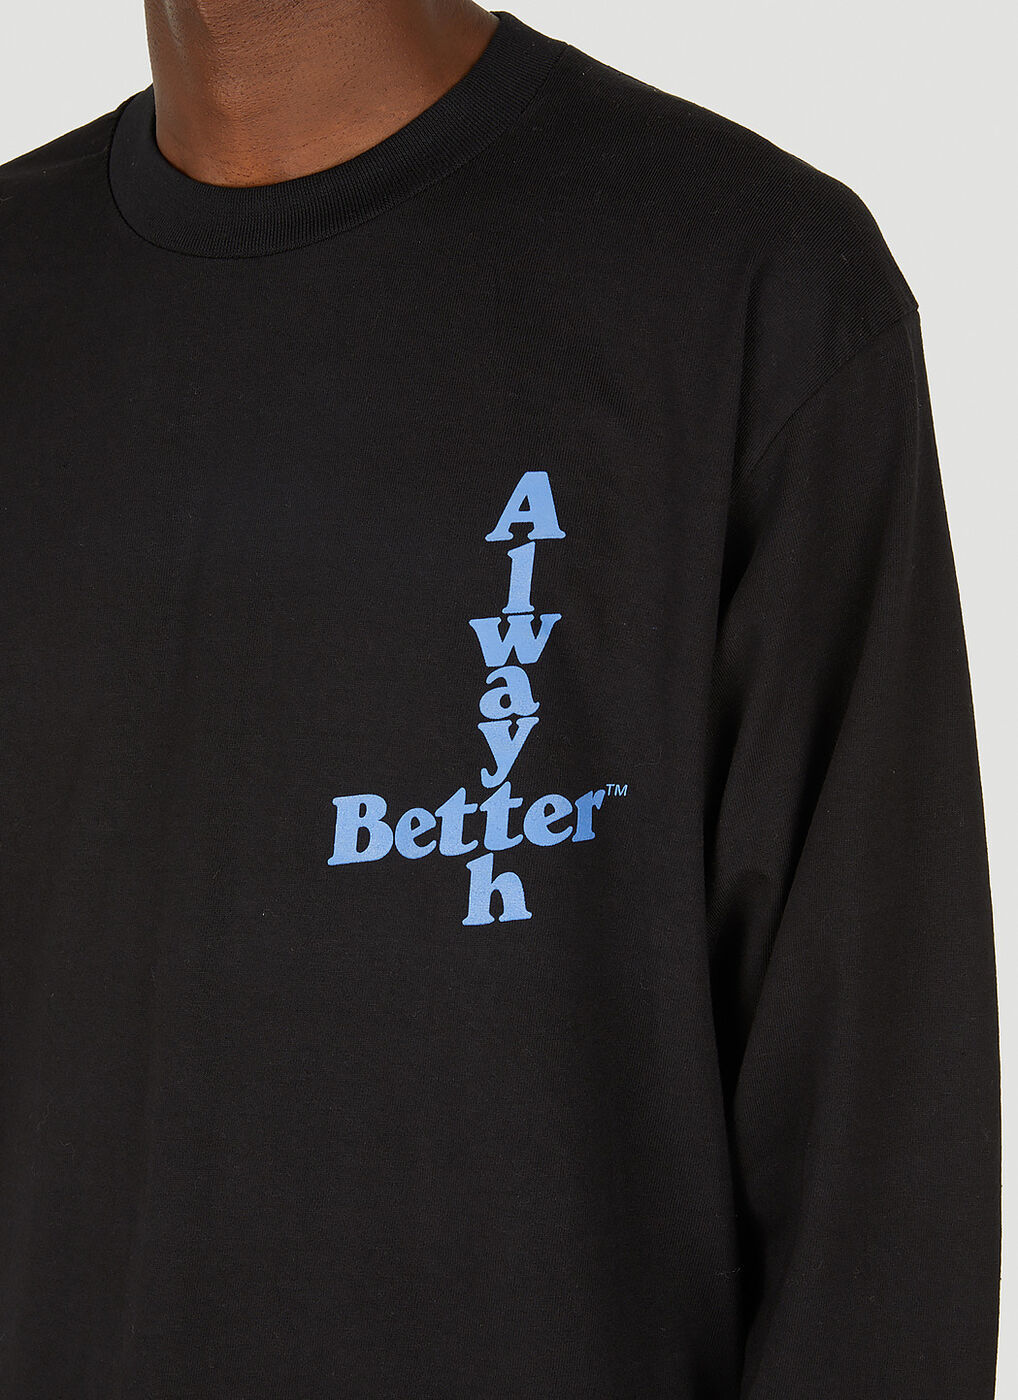 Alwayth Money Long Sleeve T-shirt in Black Better Gift Shop